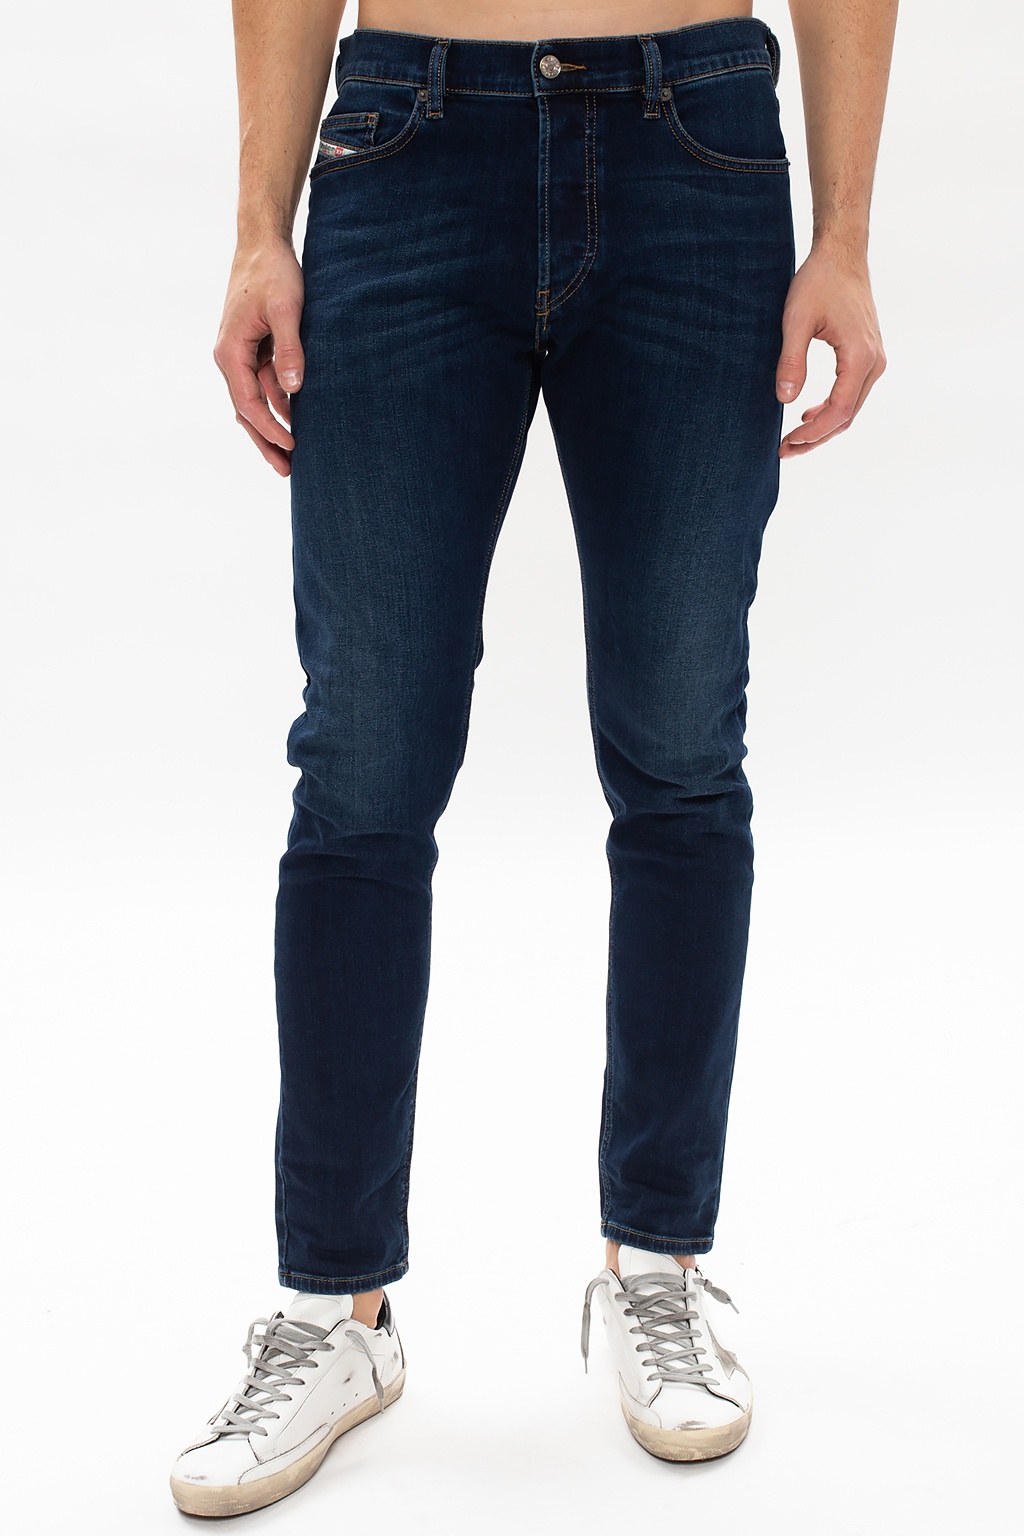 Diesel ‘D-Luster’ jeans | Men's Clothing | Vitkac